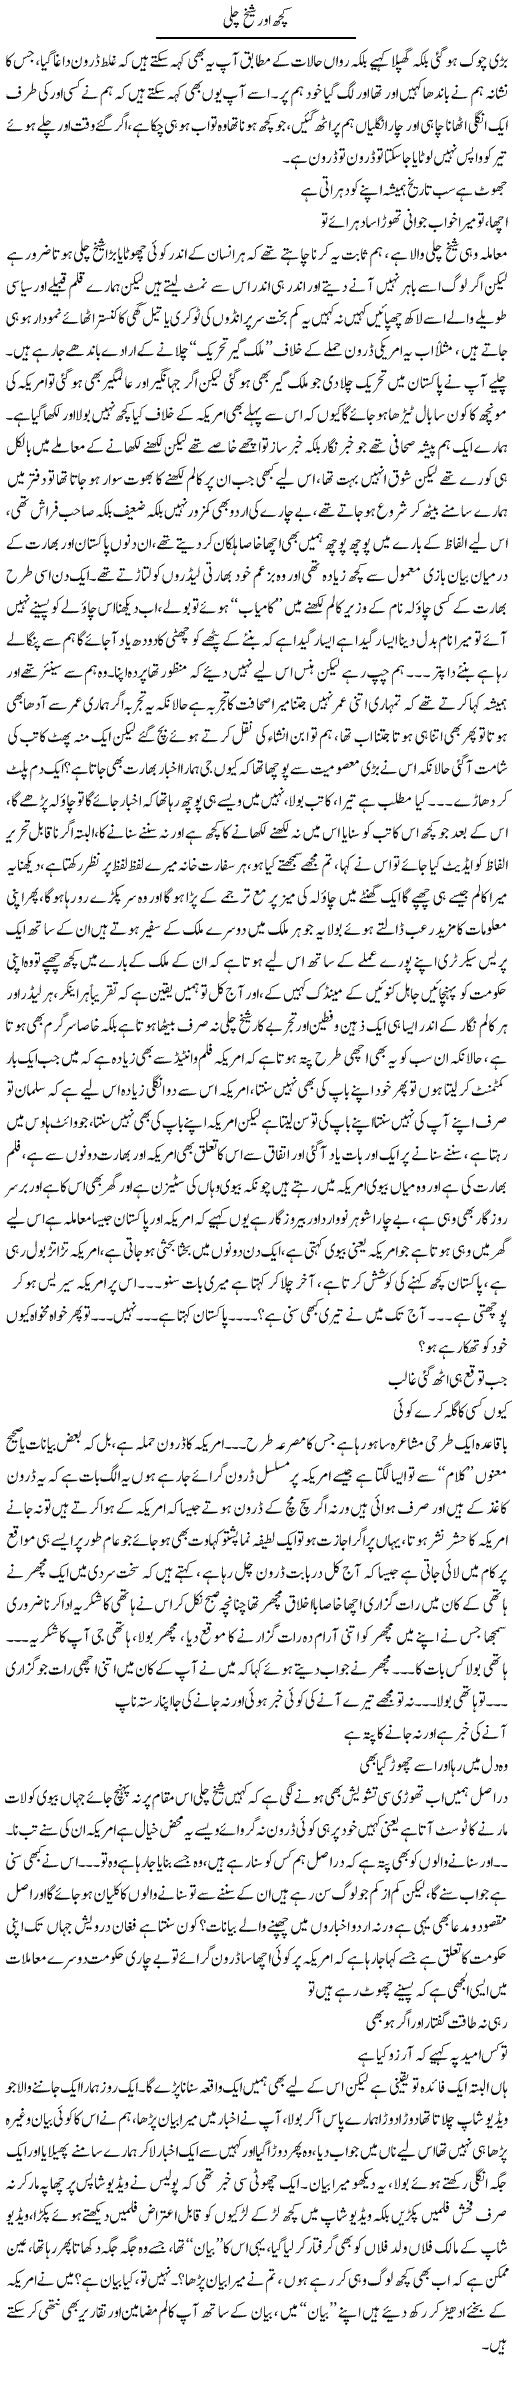 Kuch Aor Shaikh Chilli | Saad Ullah Jan Barq | Daily Urdu Columns